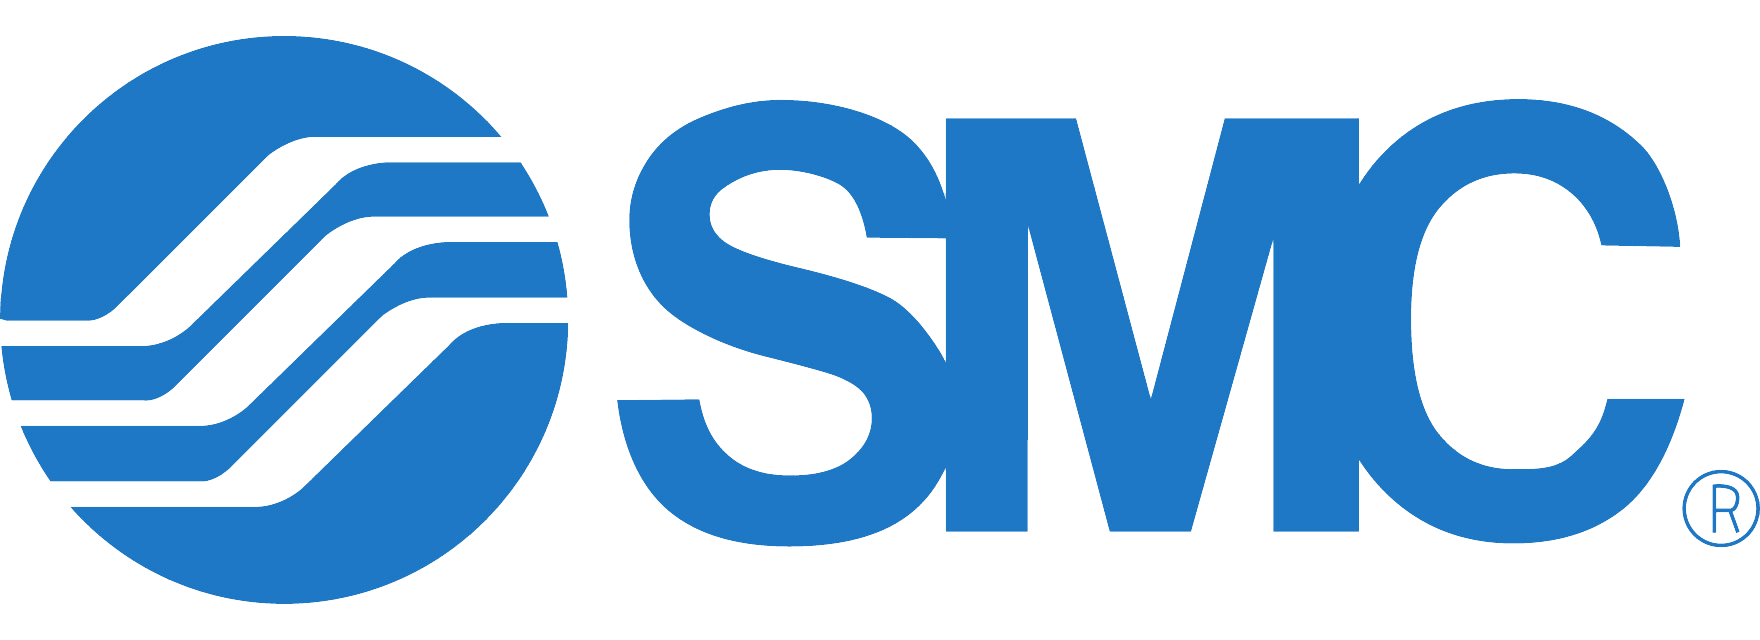 SMC Logo panagenda Reference